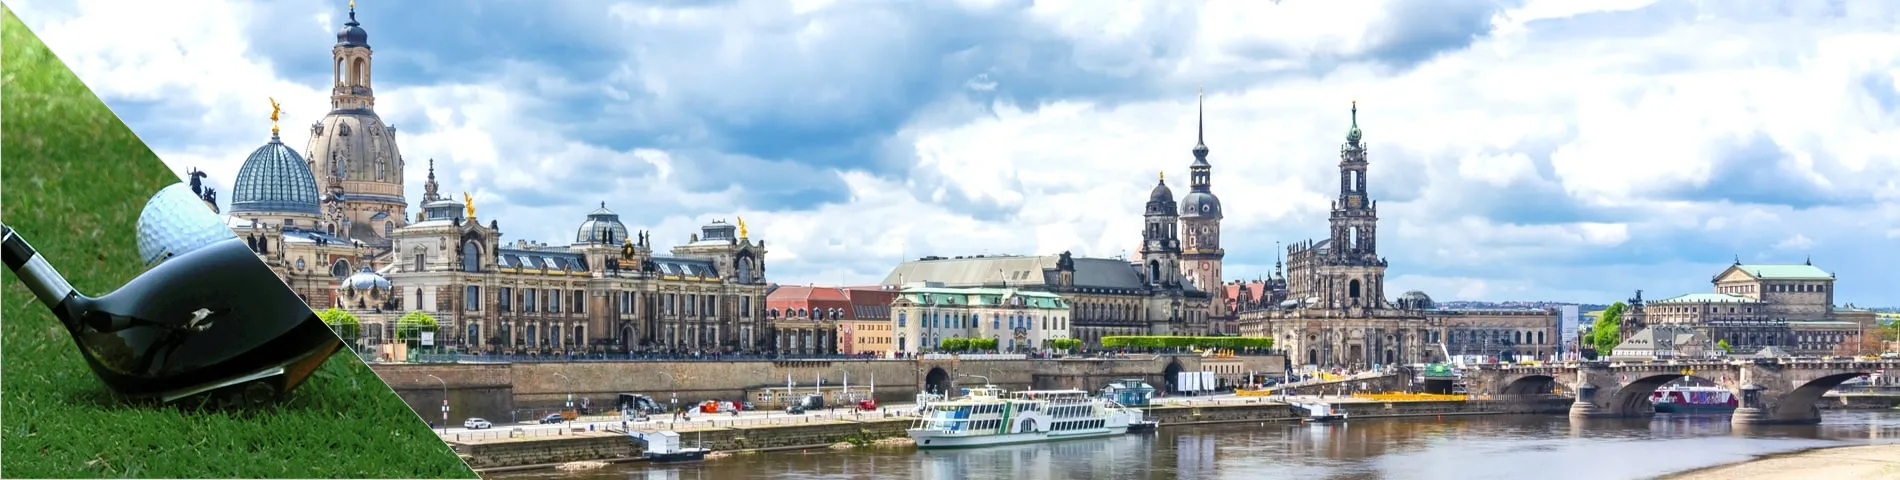 Dresden - 